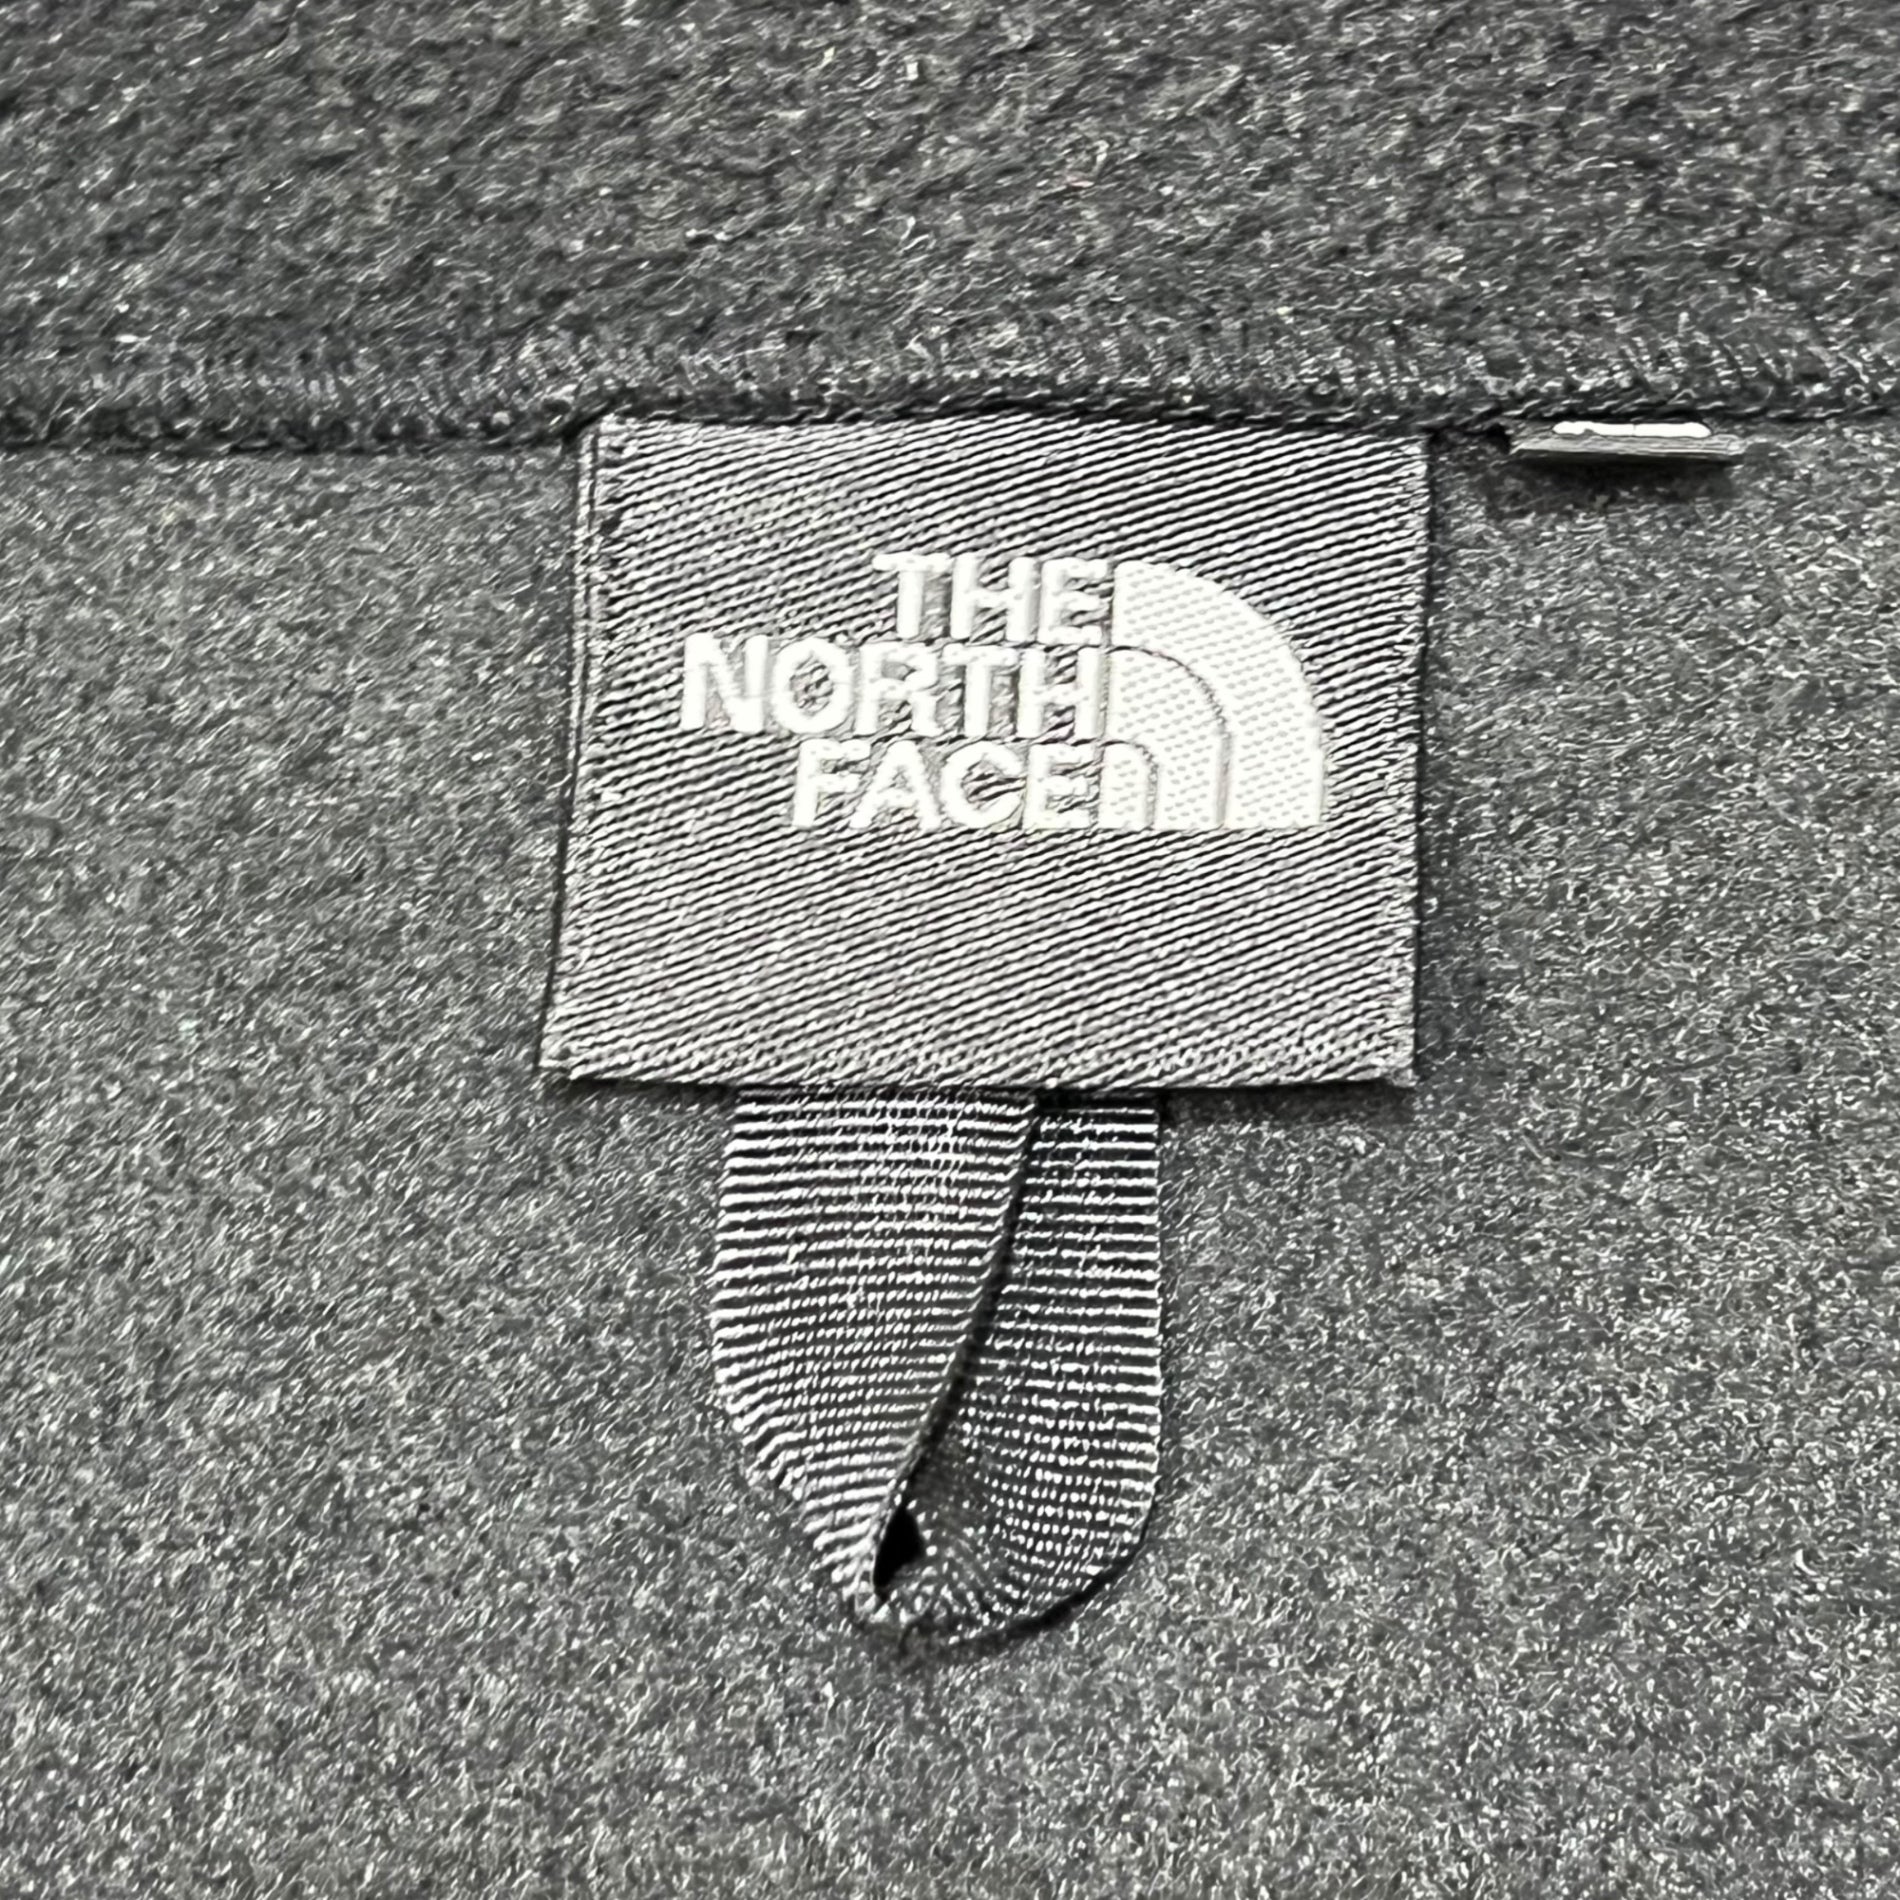 THE NORTH FACE(ノースフェイス) DENALI JACKET デナリ ジャケット NA71831 XL イエロー×ブラック フリース ジャケット